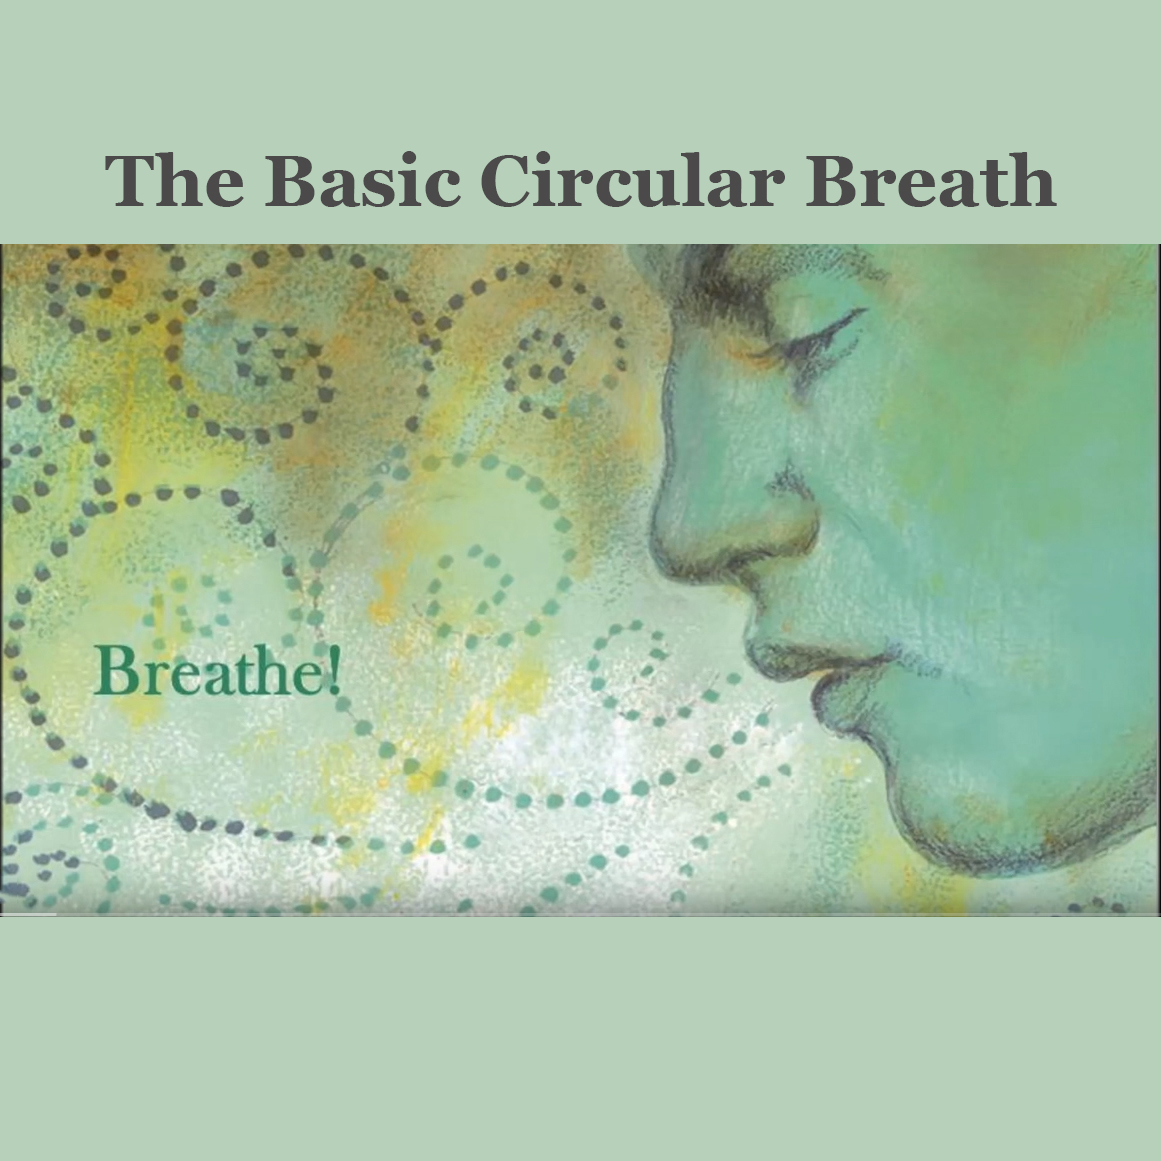 The Basic Circular Breath